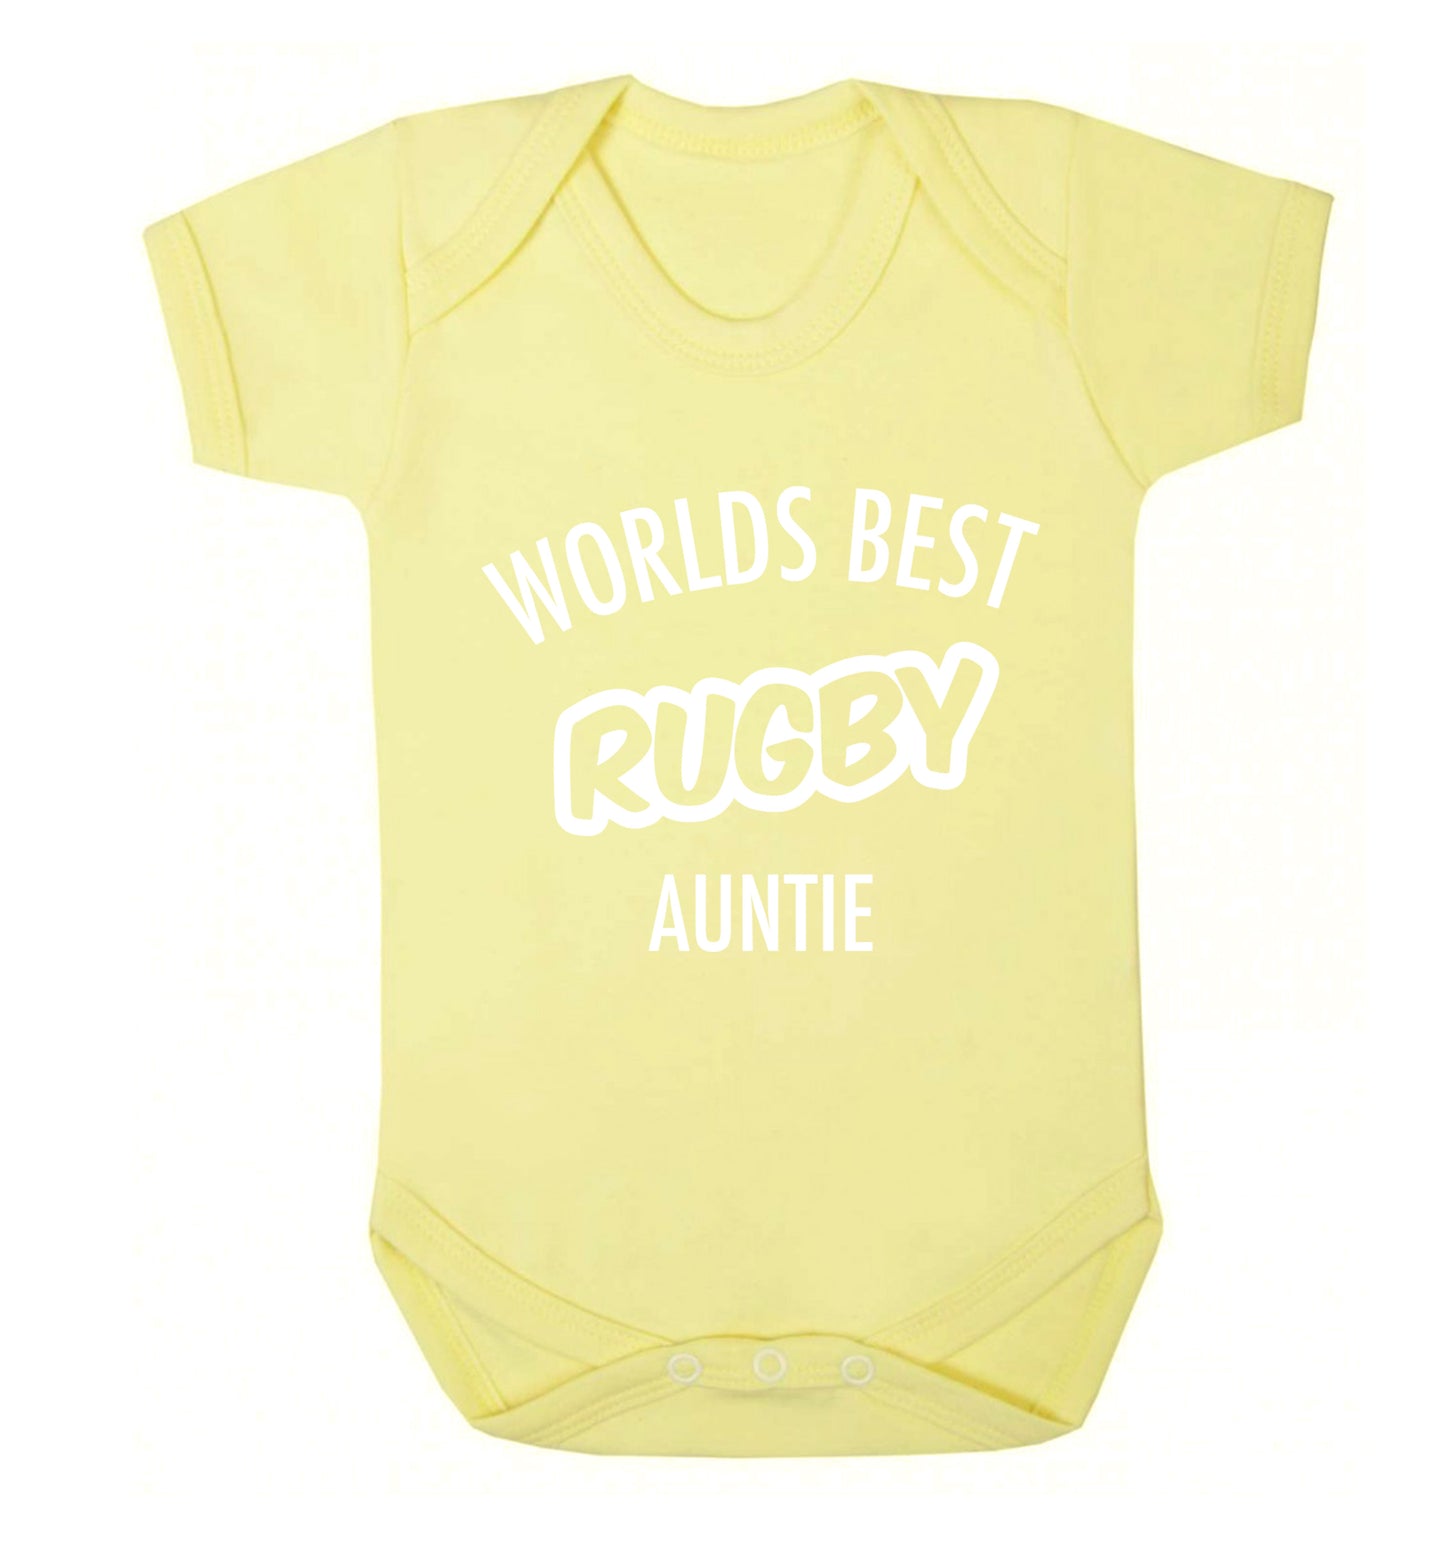 Worlds best rugby auntie Baby Vest pale yellow 18-24 months